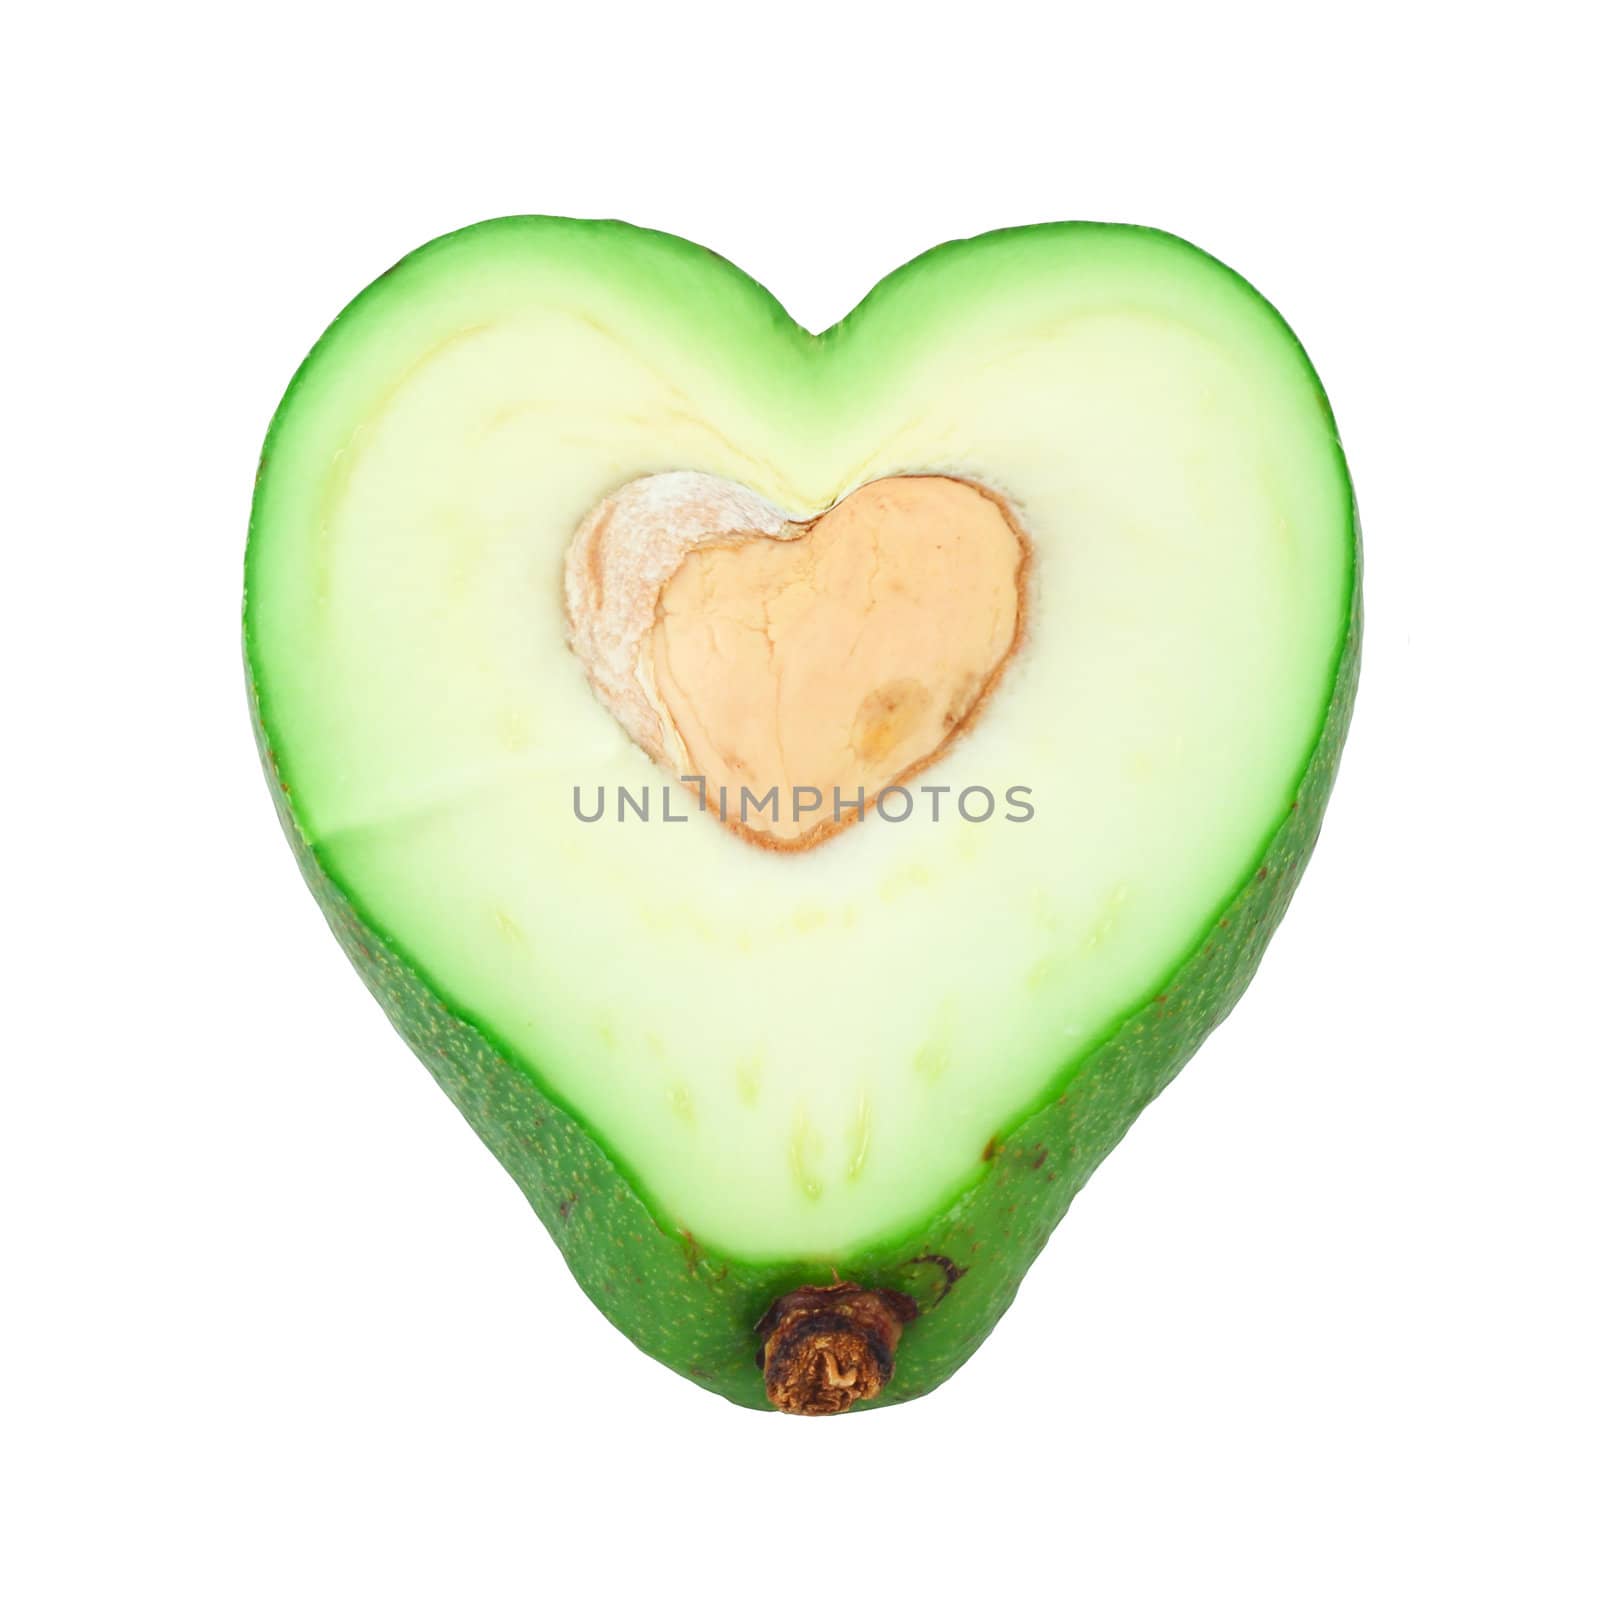 Cut avocado shaped like heart healthcare concept